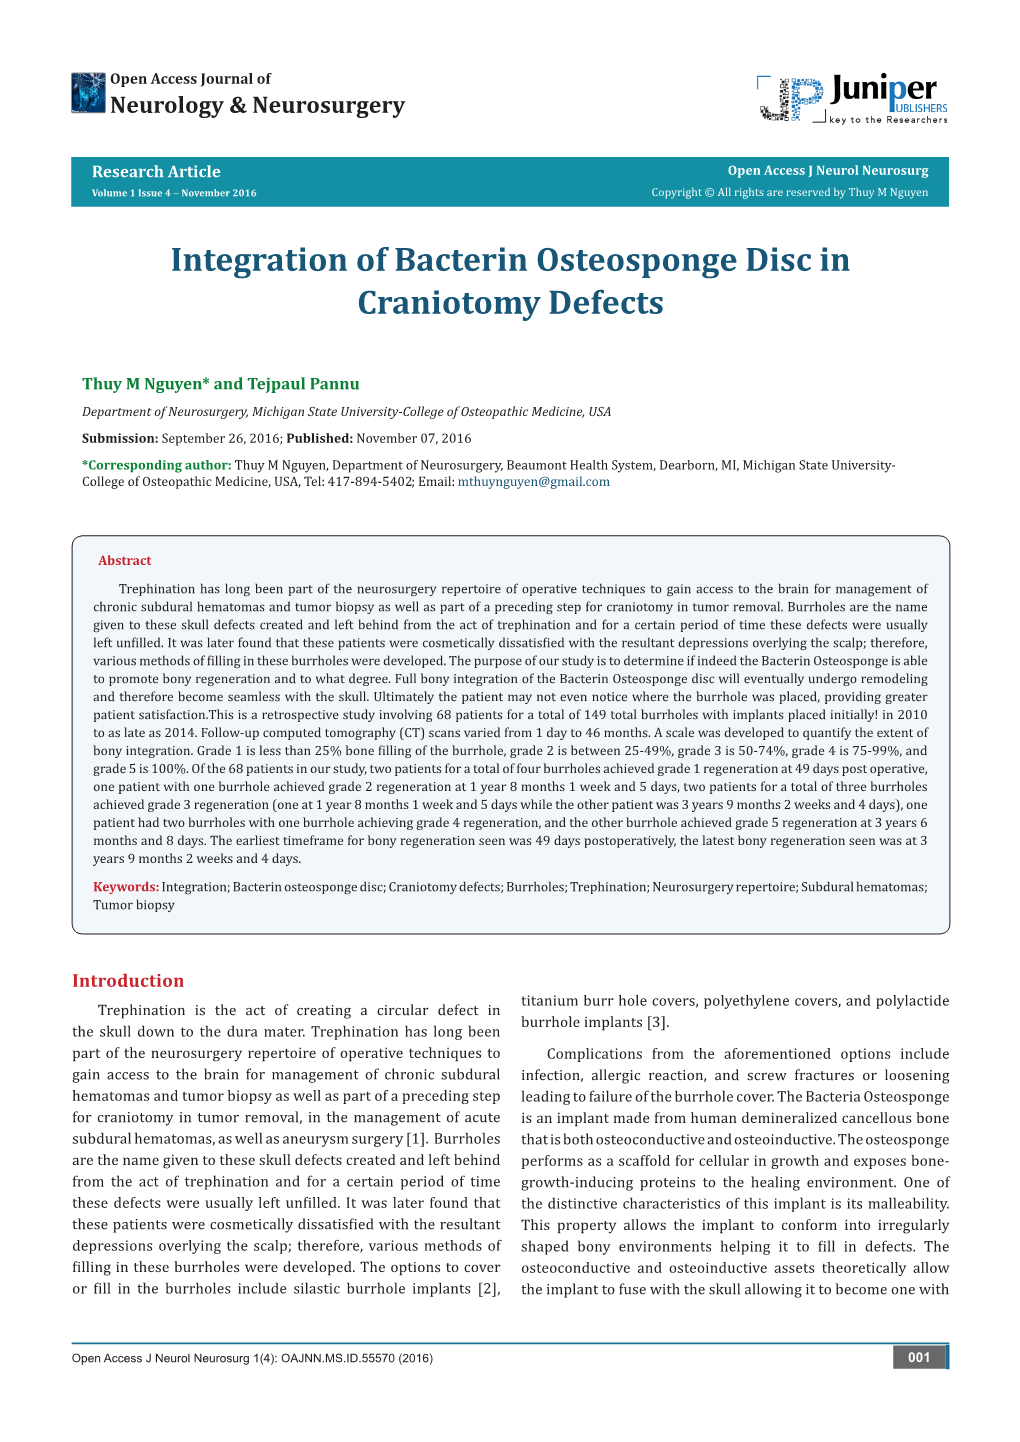 Integration of Bacterin Osteosponge Disc in Craniotomy Defects